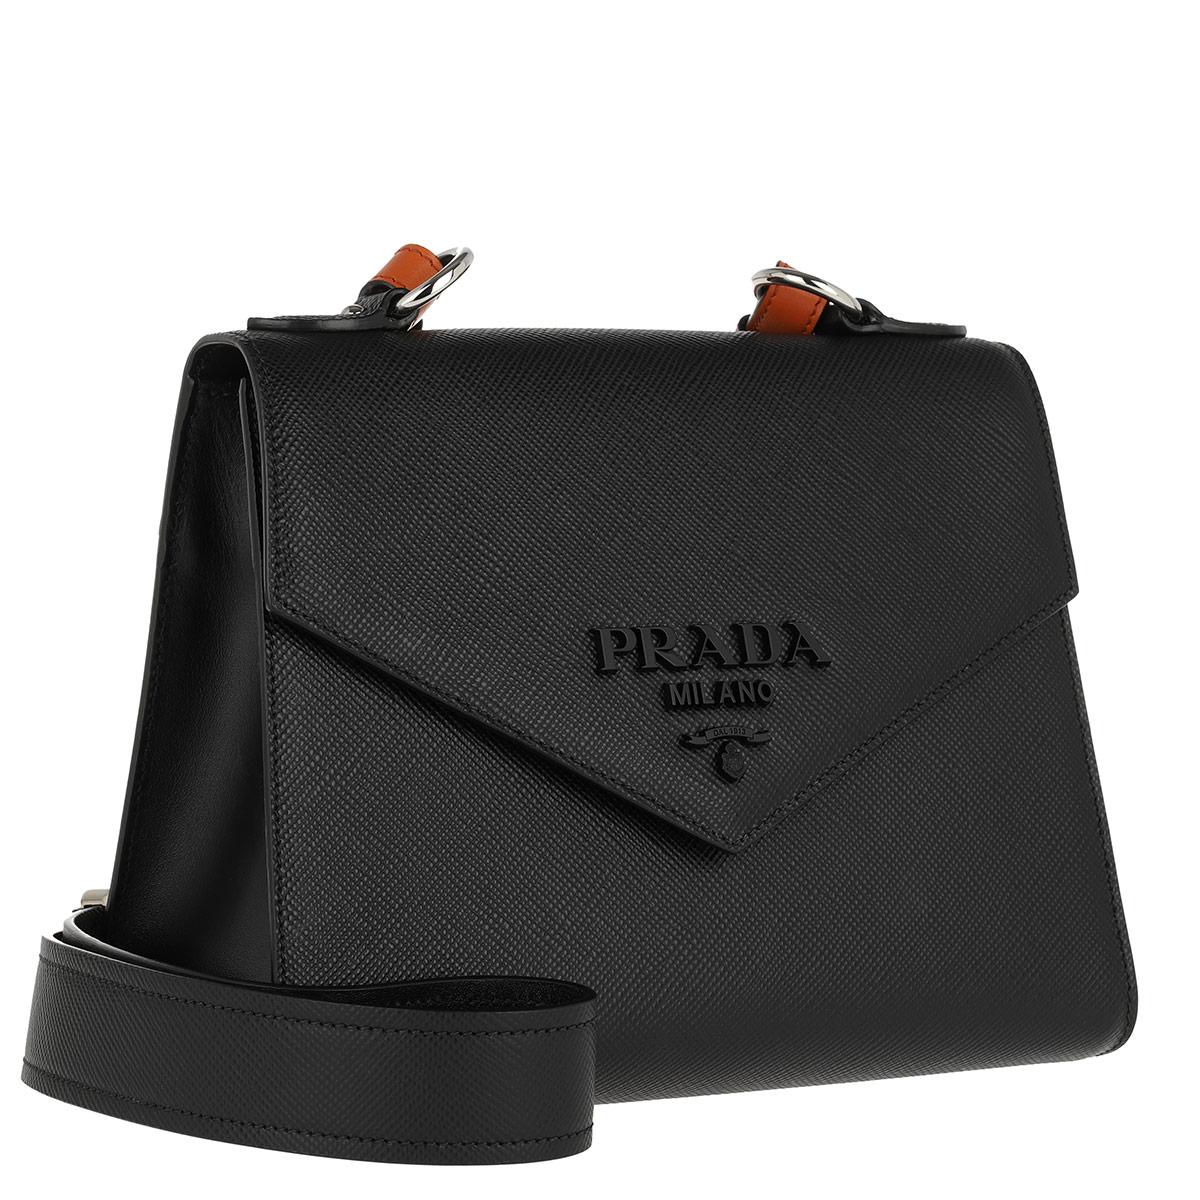 Prada Prada Monochrome Saffiano Leather Bag Black/Papaya at FORZIERI